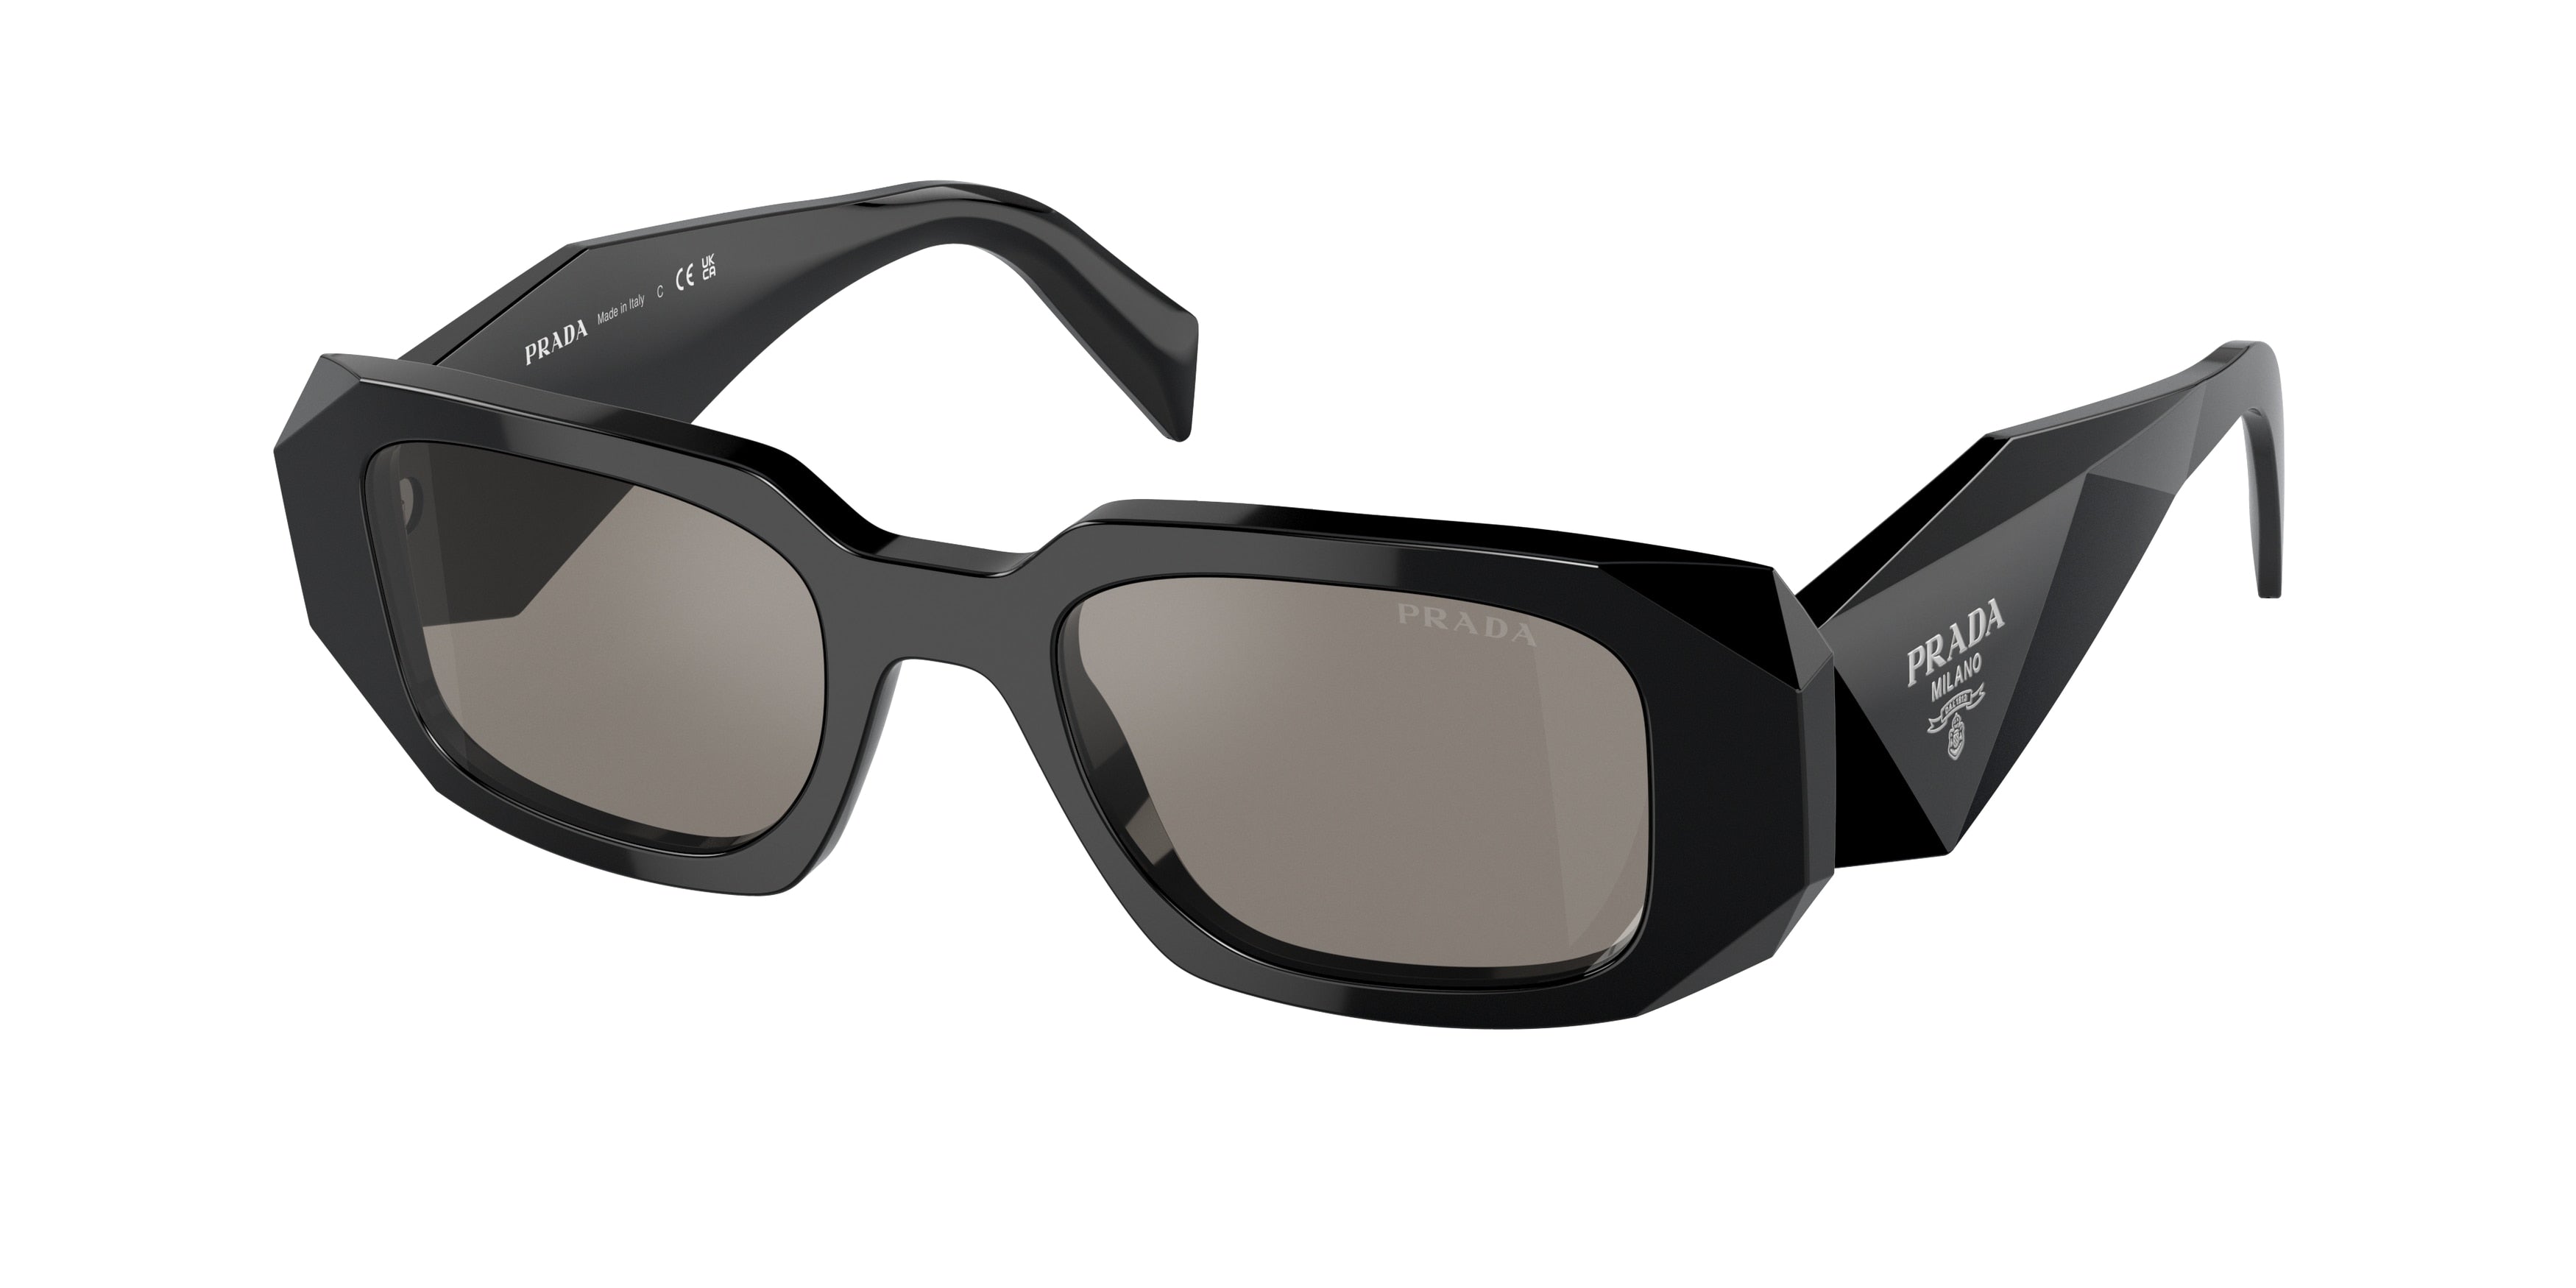 Buy First Copy Sunglasses | 1st copy sunglasses | Sunglasses villa